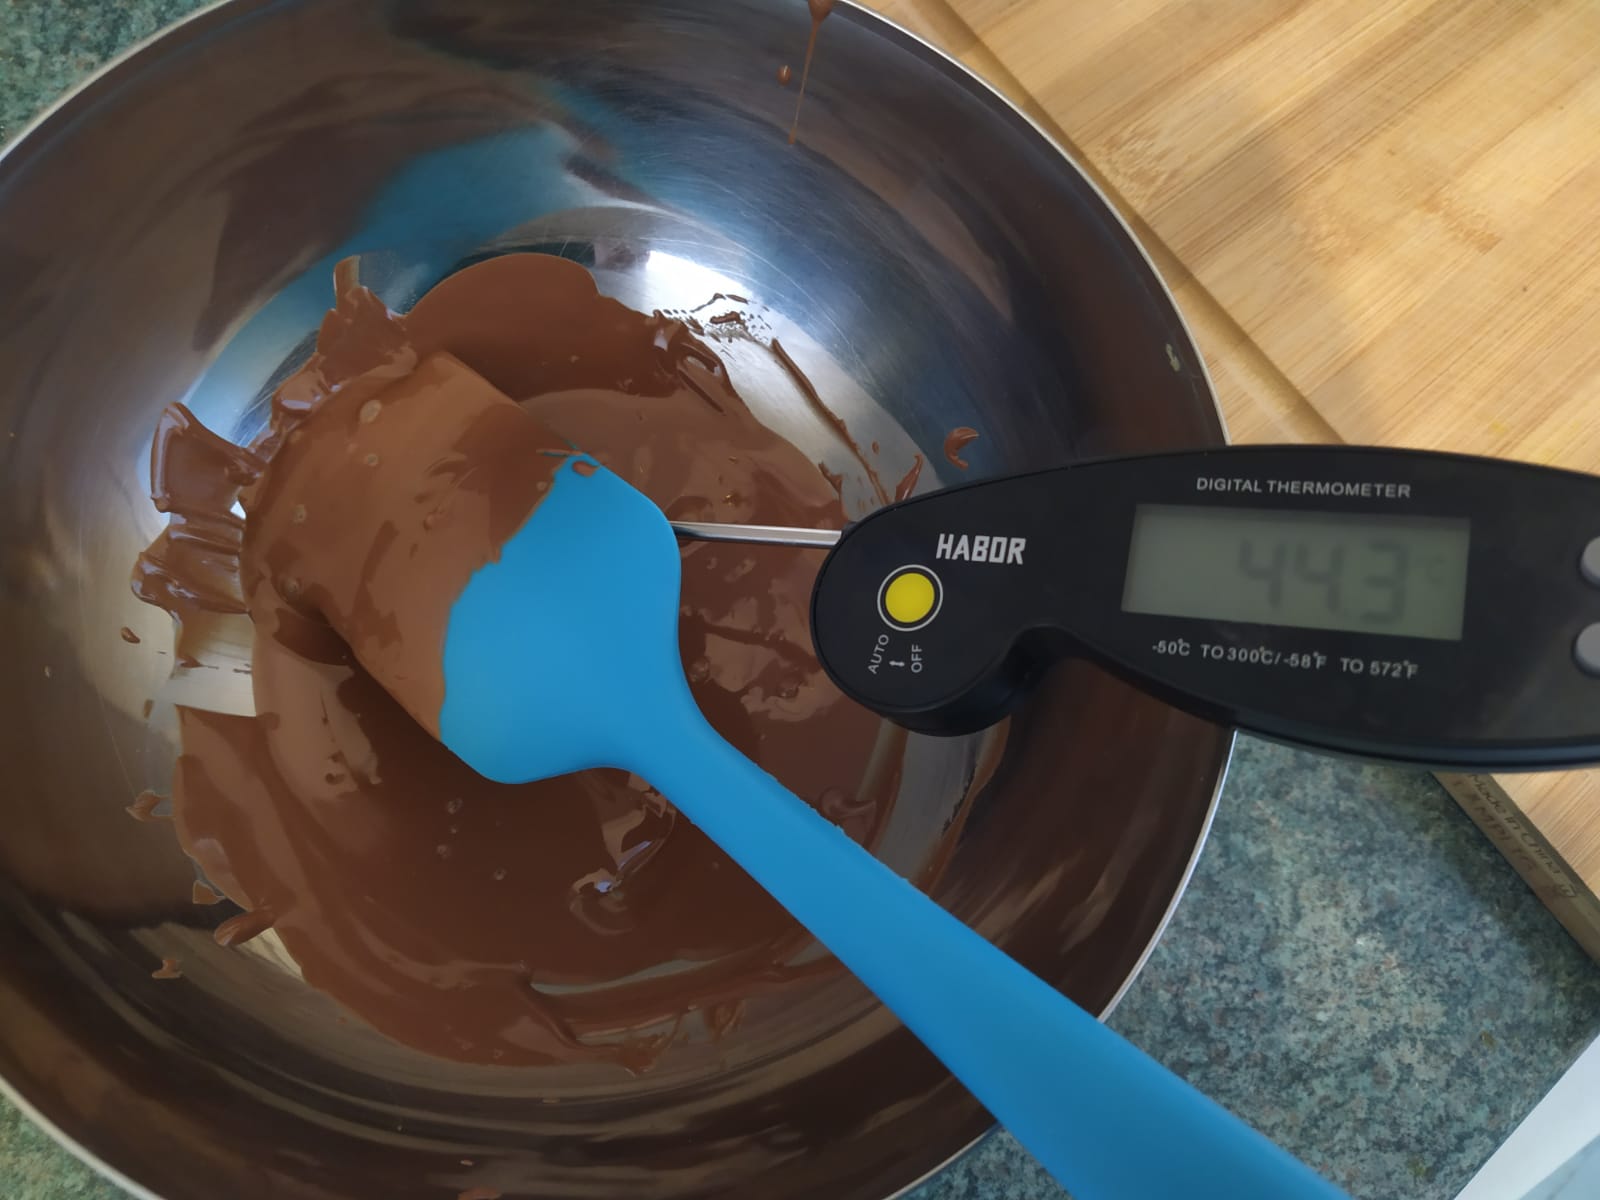 Chocolate 45 degrees